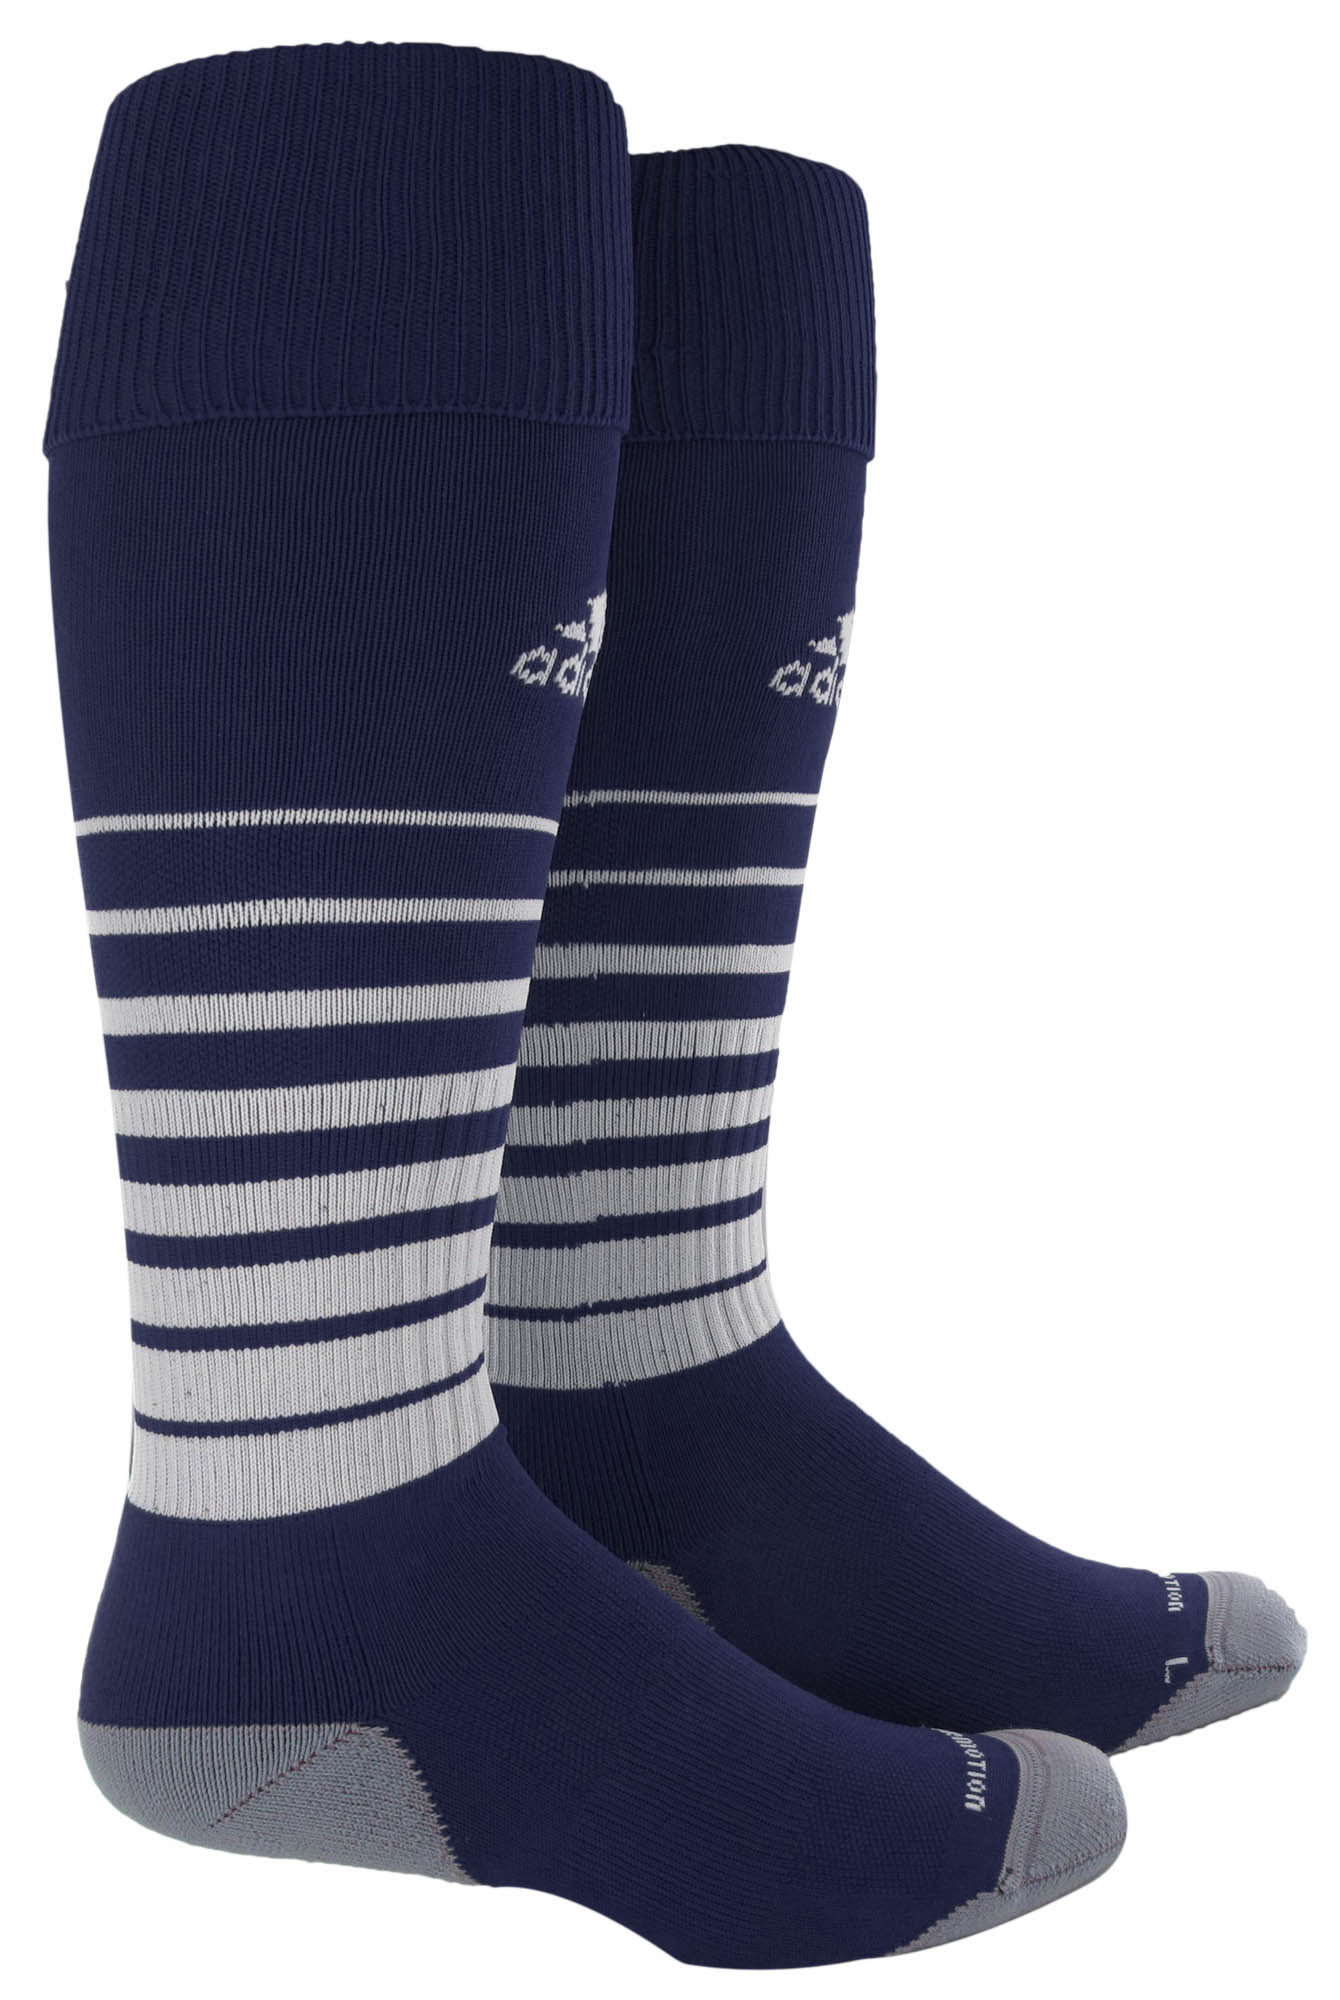 Adidas Team Speed Soccer Socks Size Chart